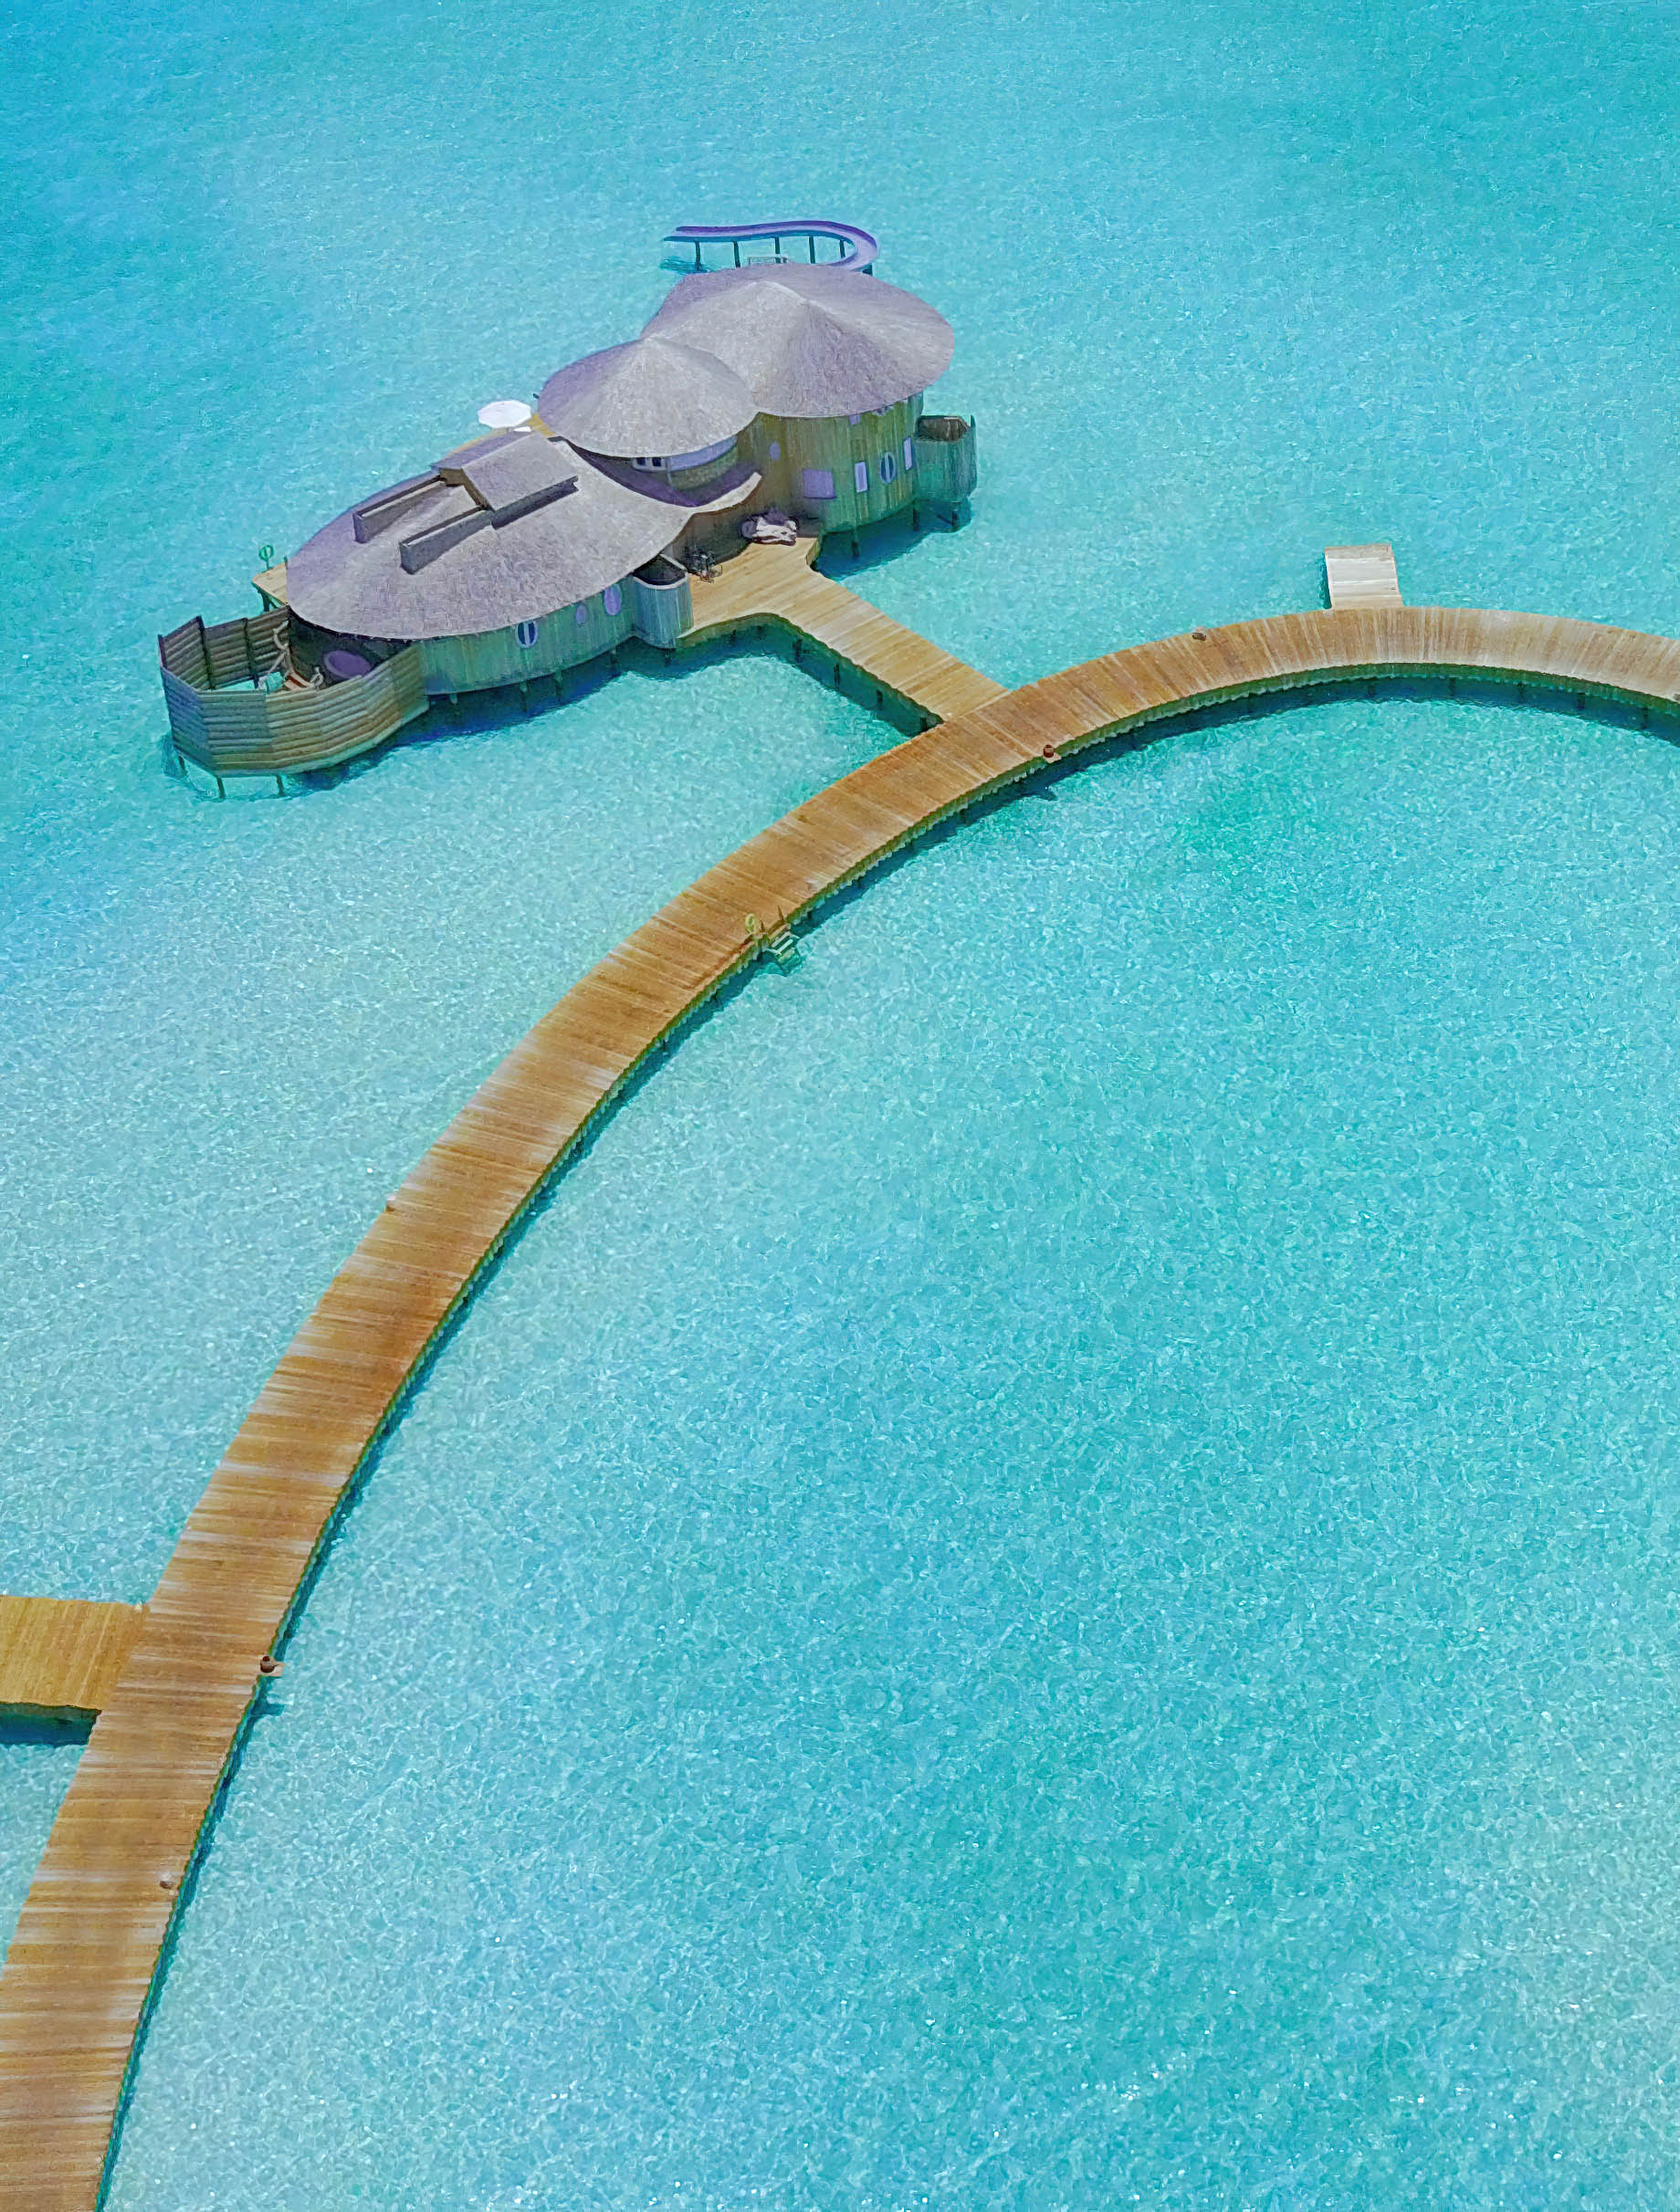 Soneva Jani Resort - Noonu Atoll, Medhufaru, Maldives - 3 Bedroom Water Reserve Villa with Slide Aerial